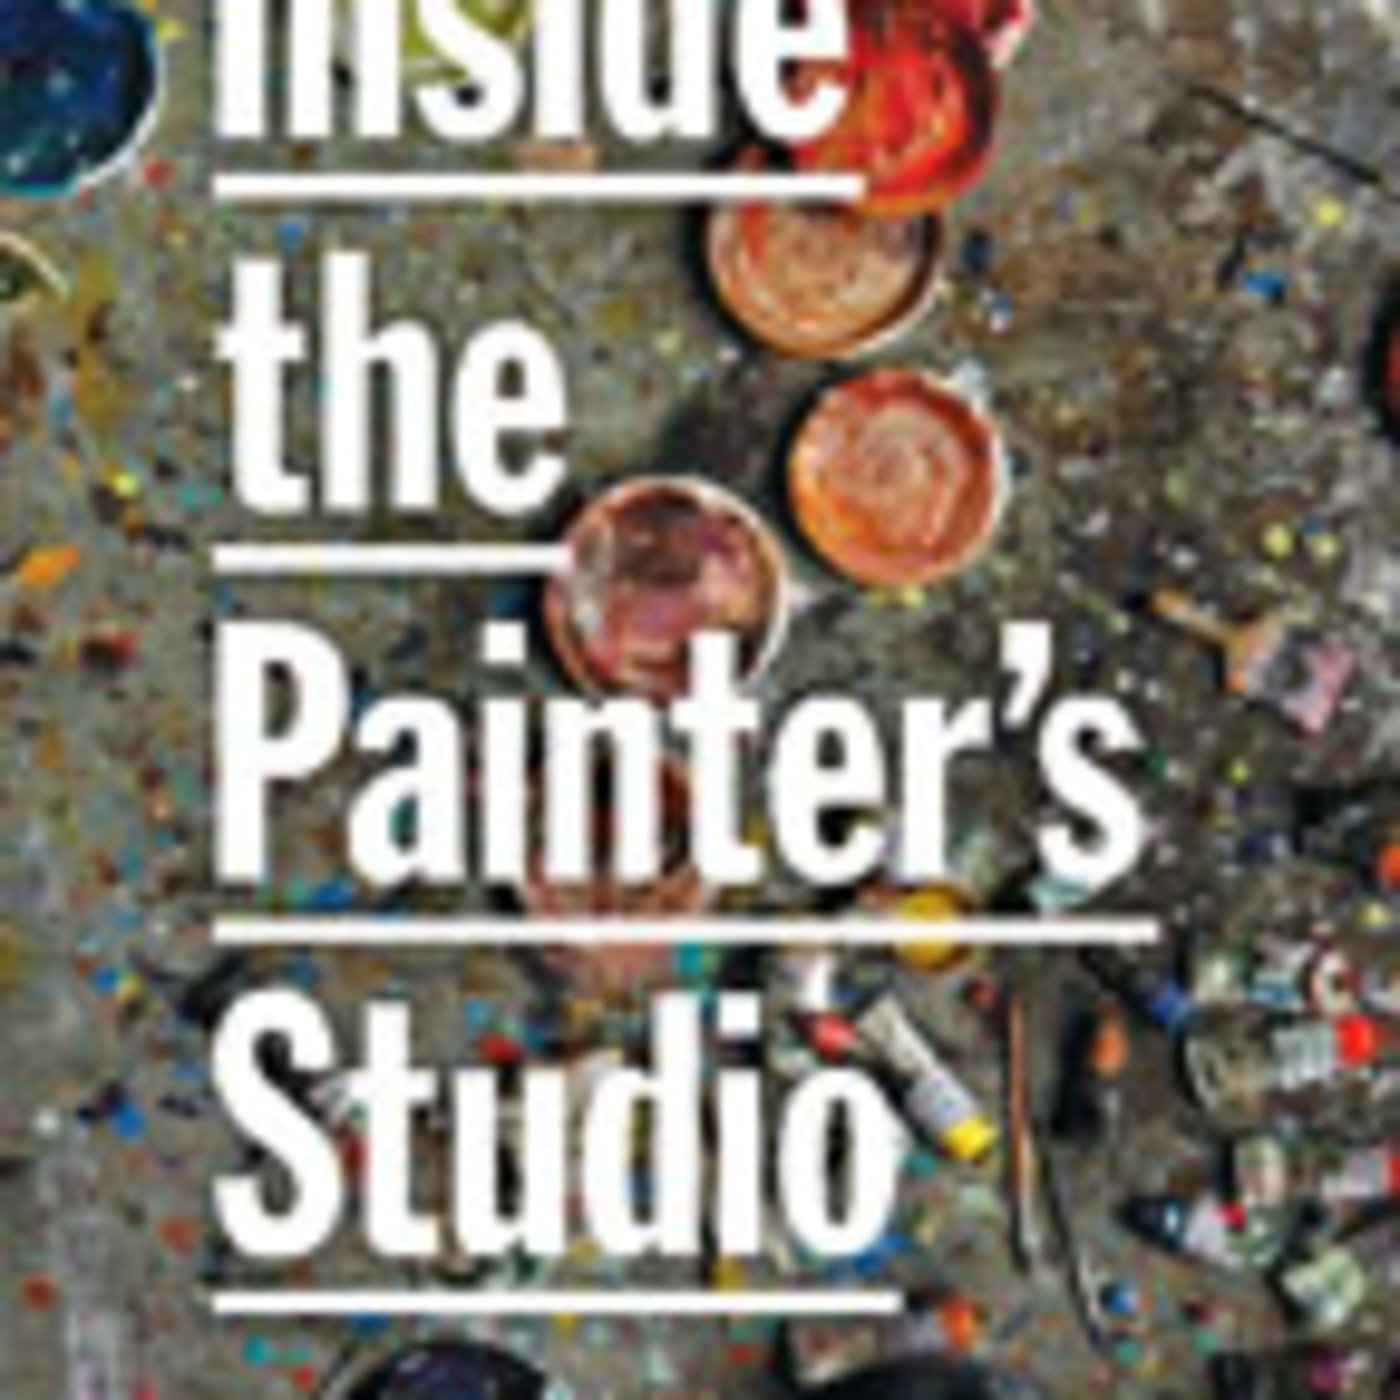 Episode 1 Joe Fig "Inside The Painter's Studio"